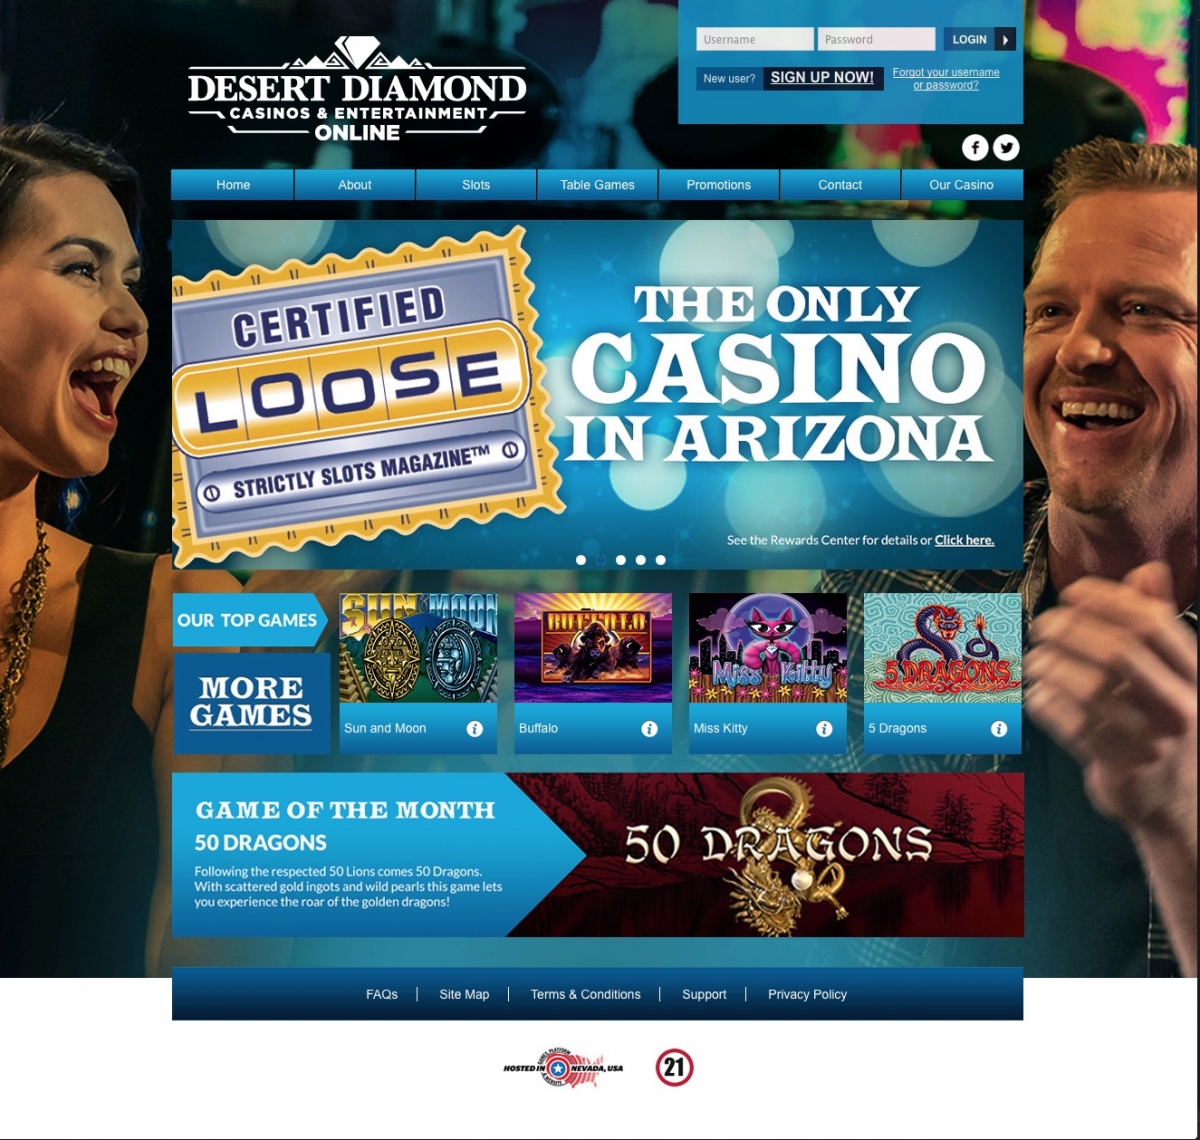 Desert diamond casino promotions